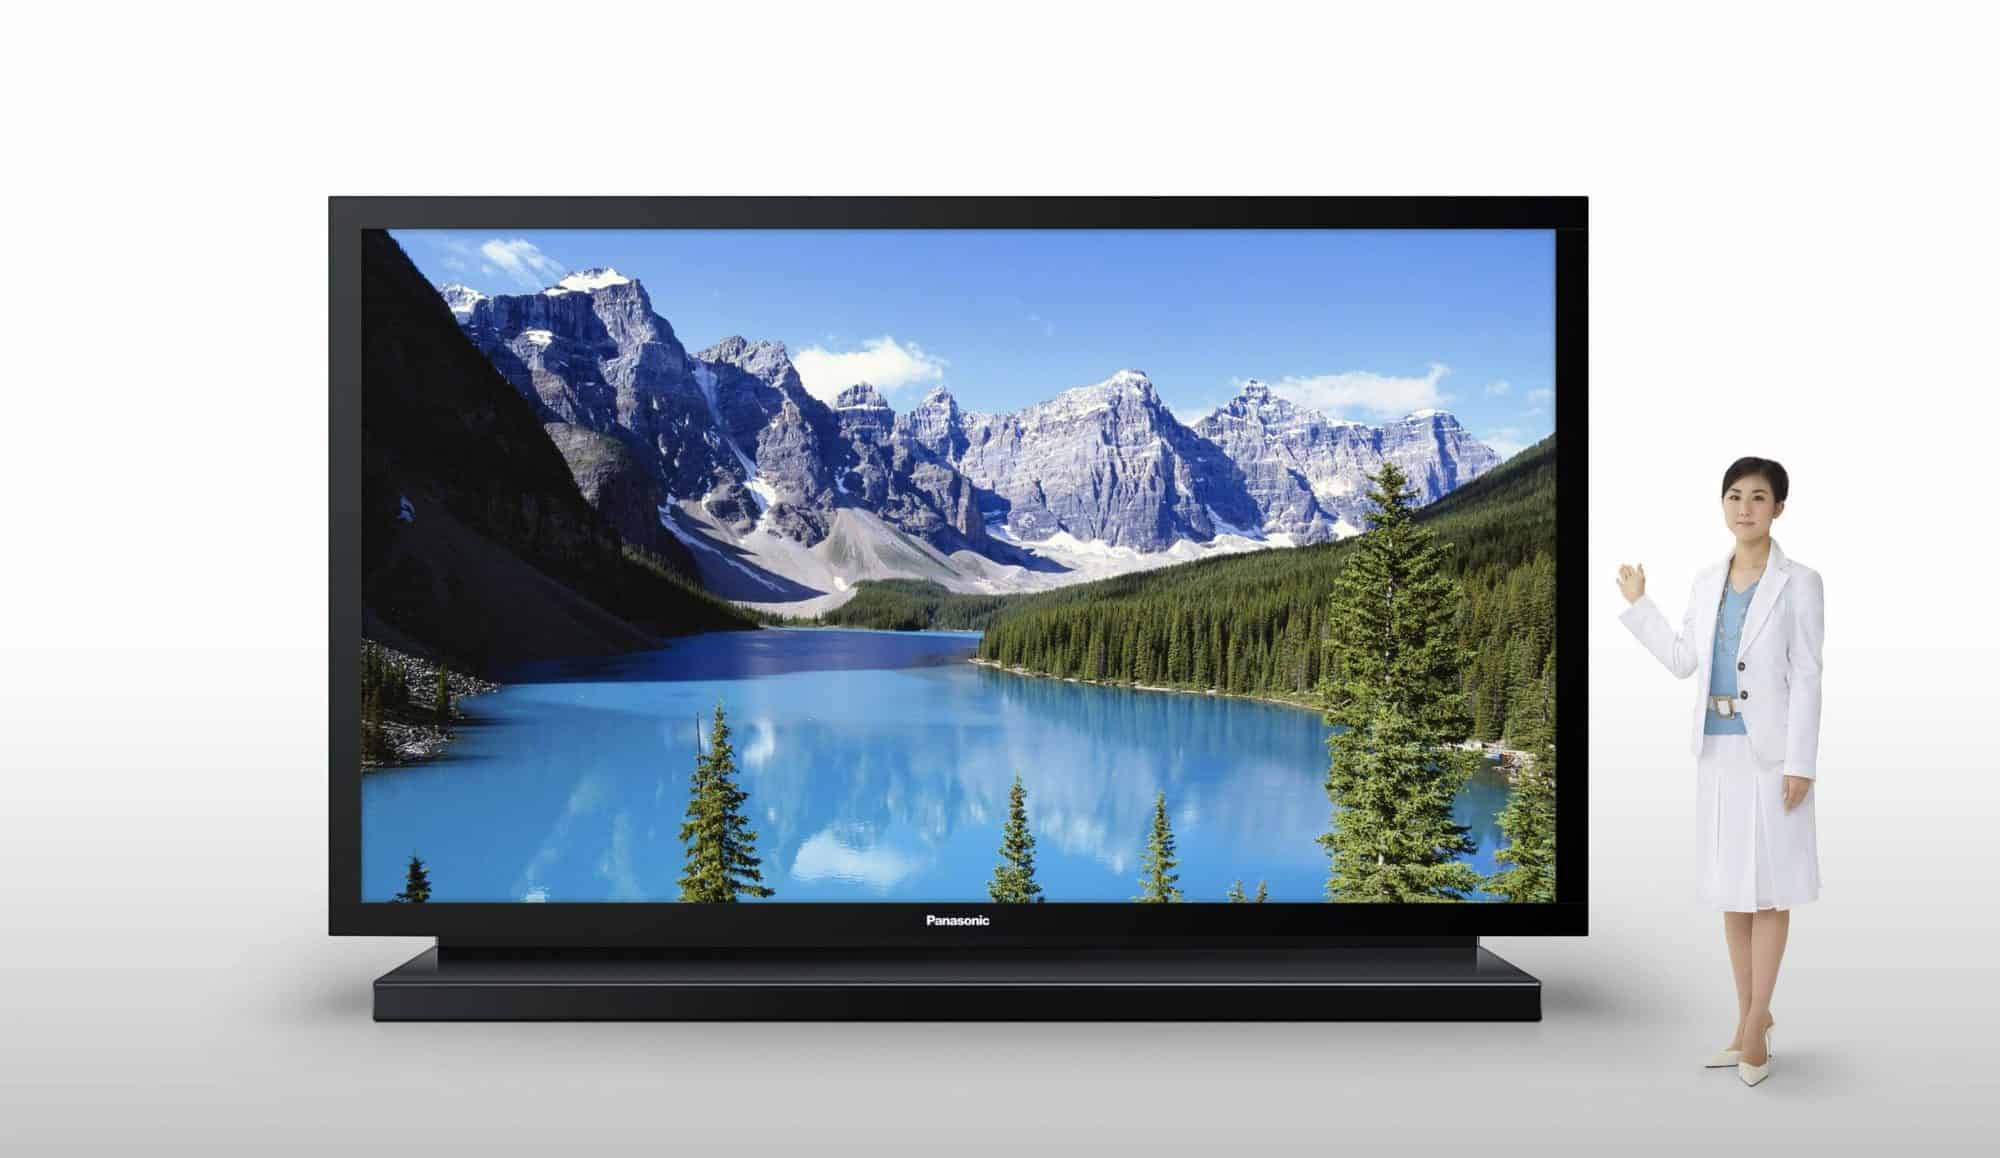 Most Expensive TVs - Panasonic TH-152UX1 – $500,000